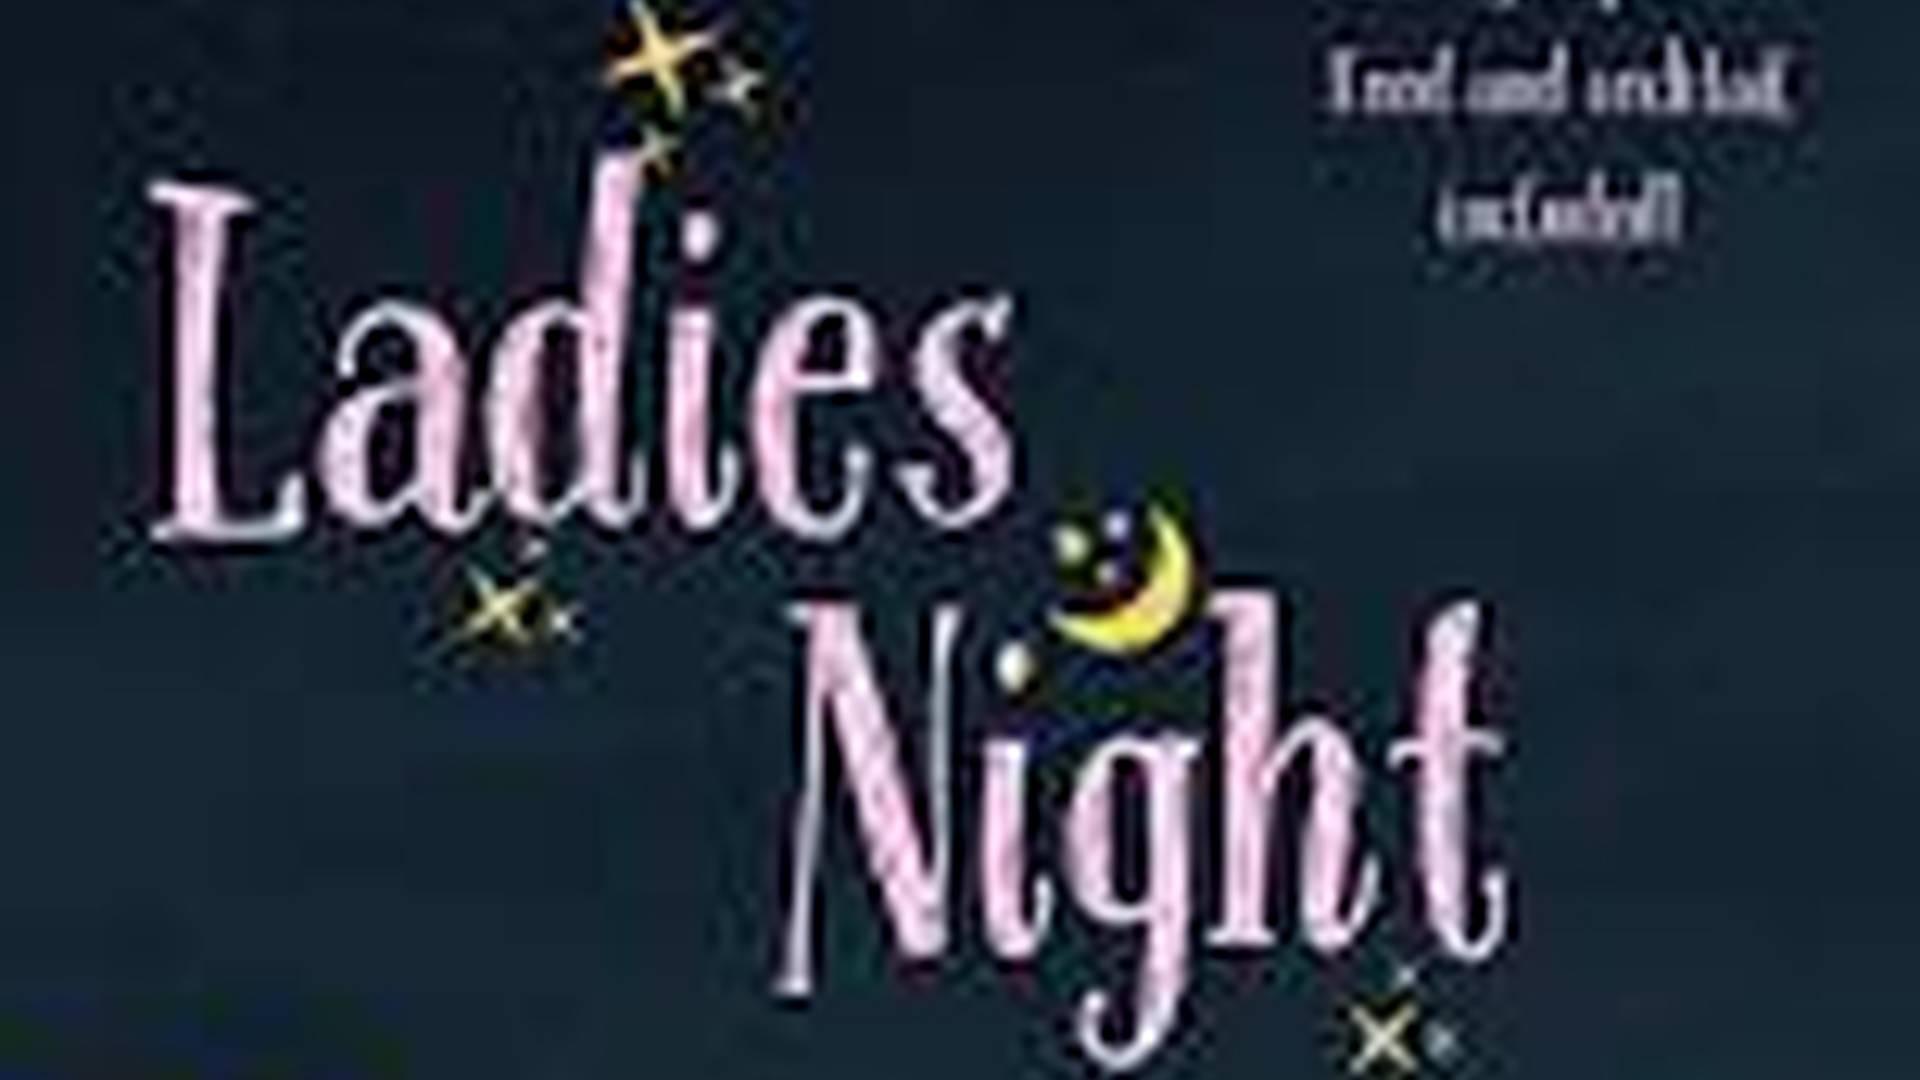 LADIES NIGHT AT WCC  photo